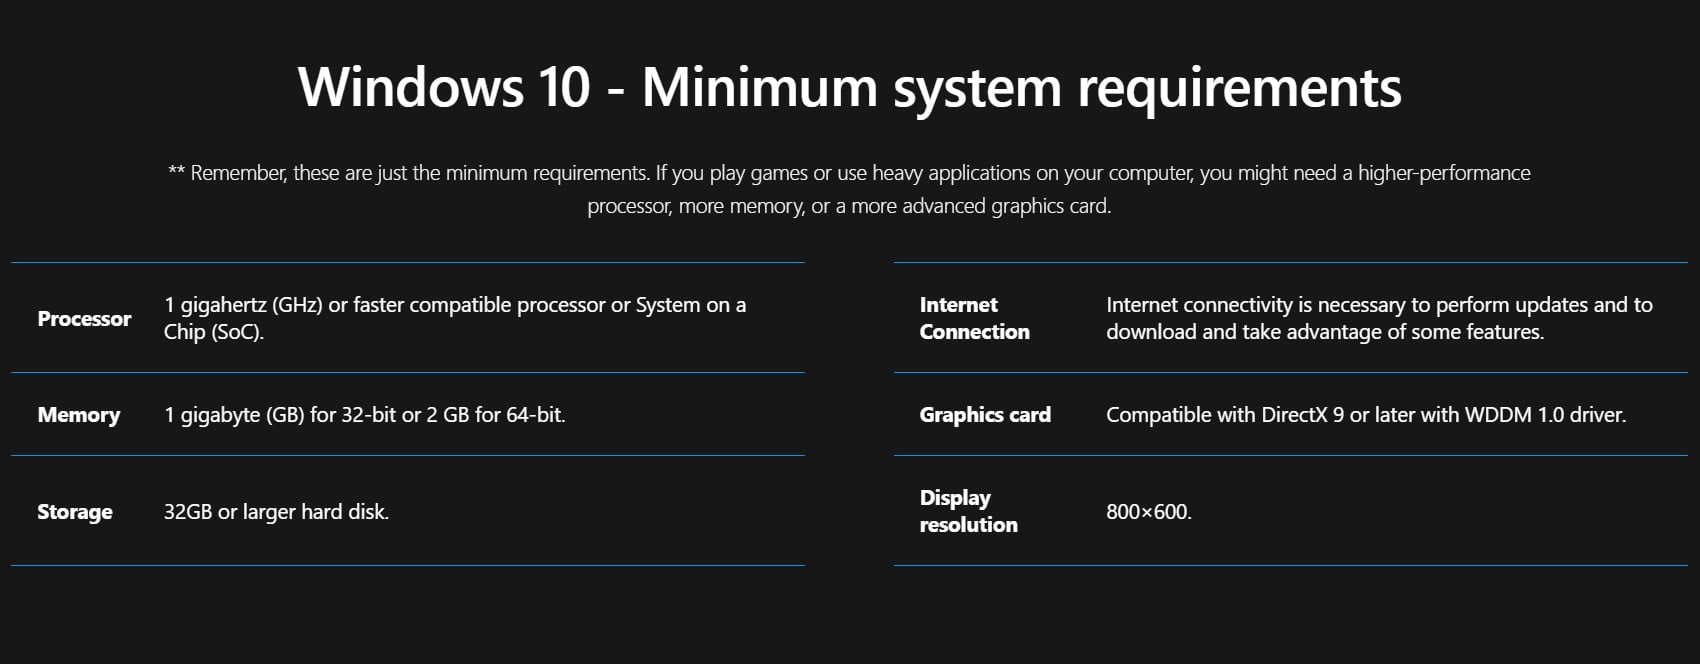 Windows 10 Pro lifetime Retail Key - Requirements